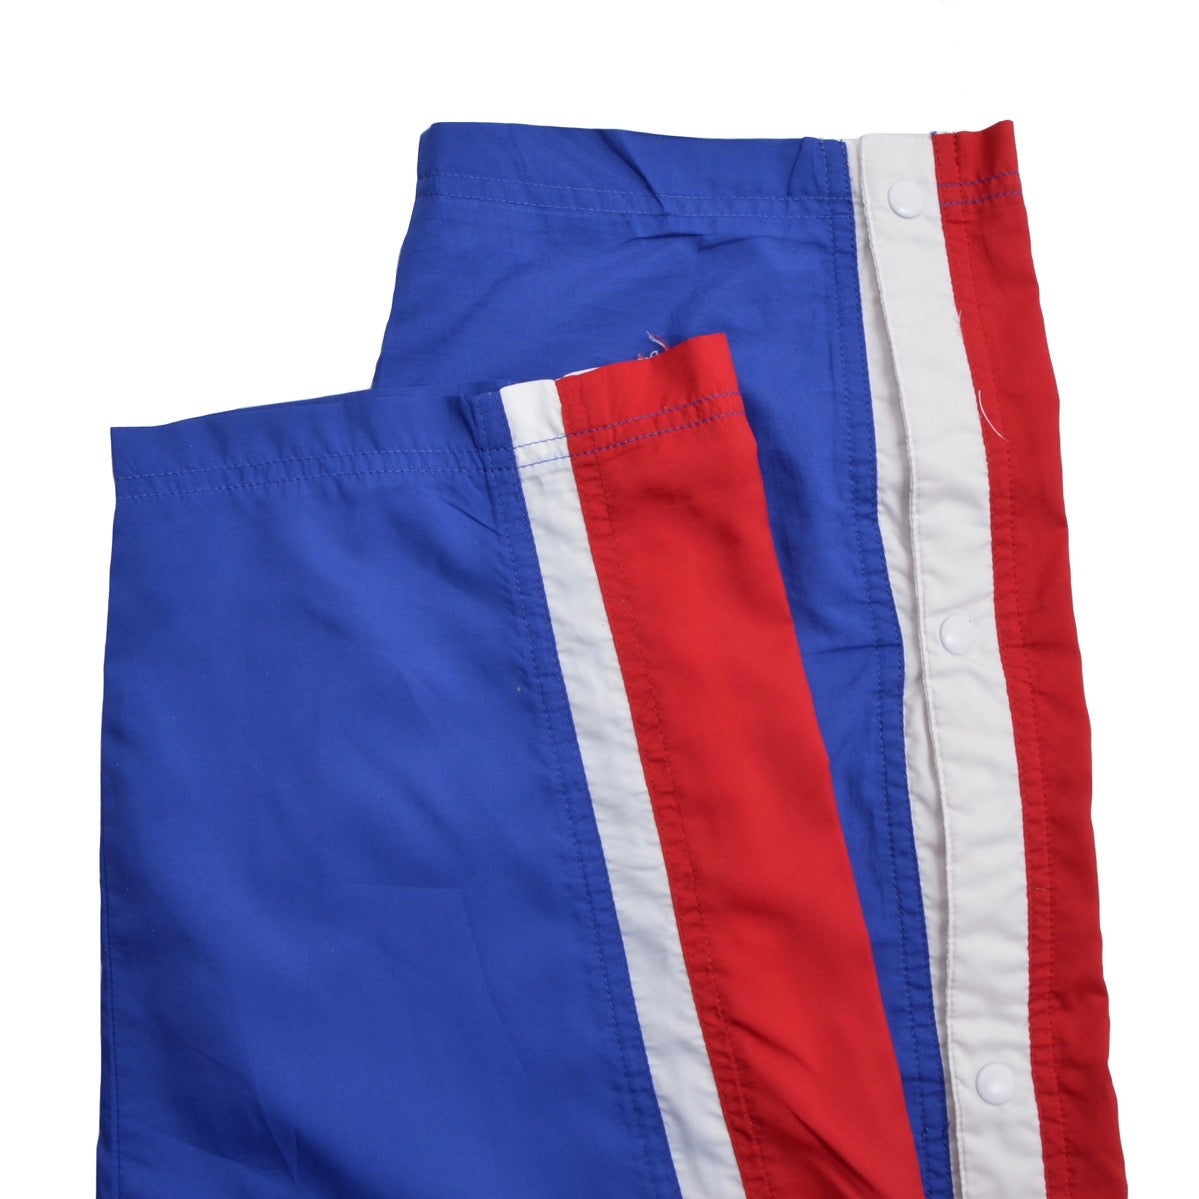 Vintage '90s Adidas Jogging/Warm Up Suit Size D10/XL - Red, White, Blue